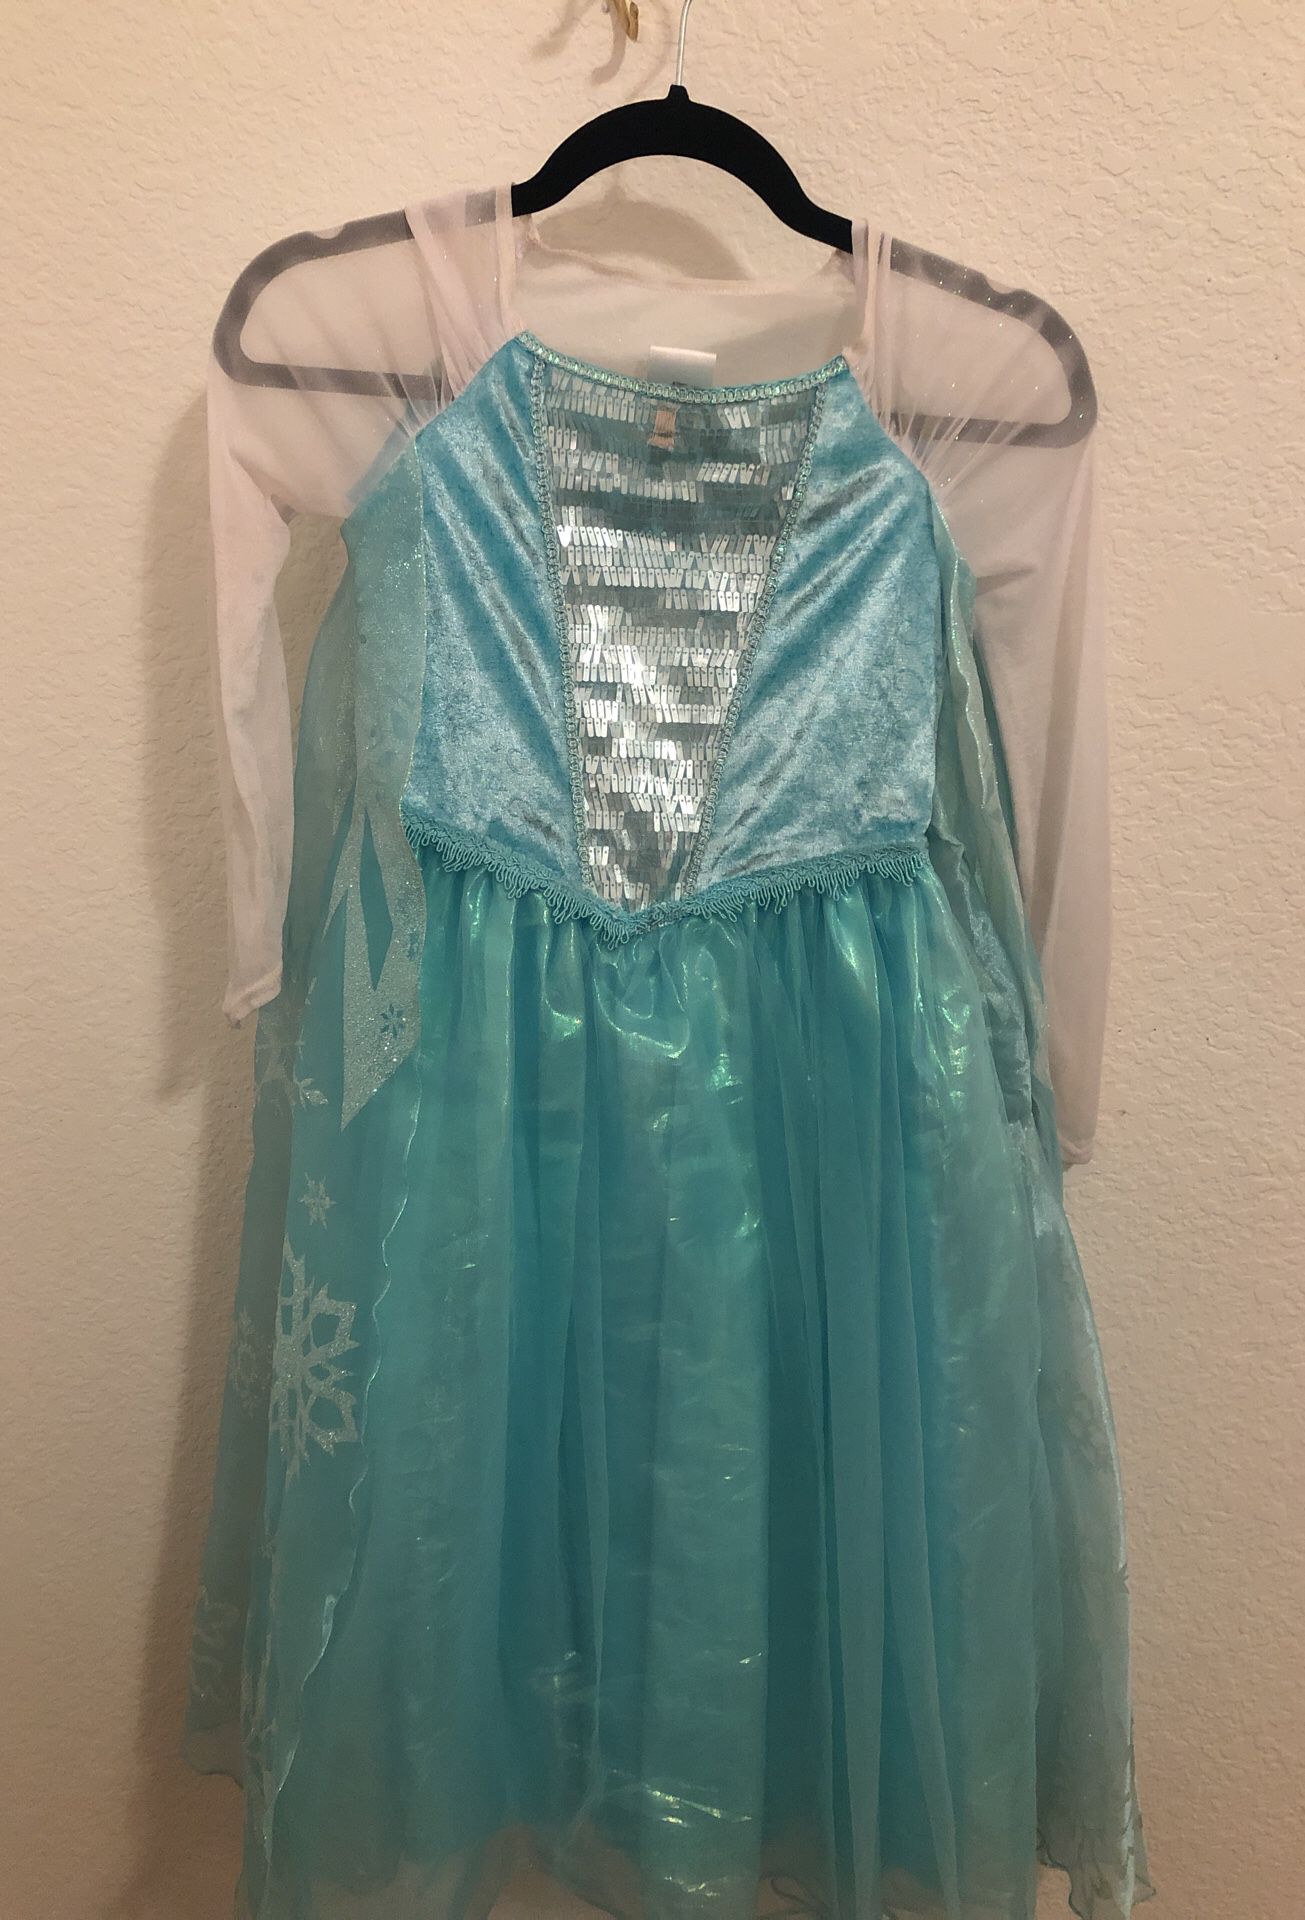 Disney Frozen Dress. Elsa Dress. Princess Dress. Size 7/8.